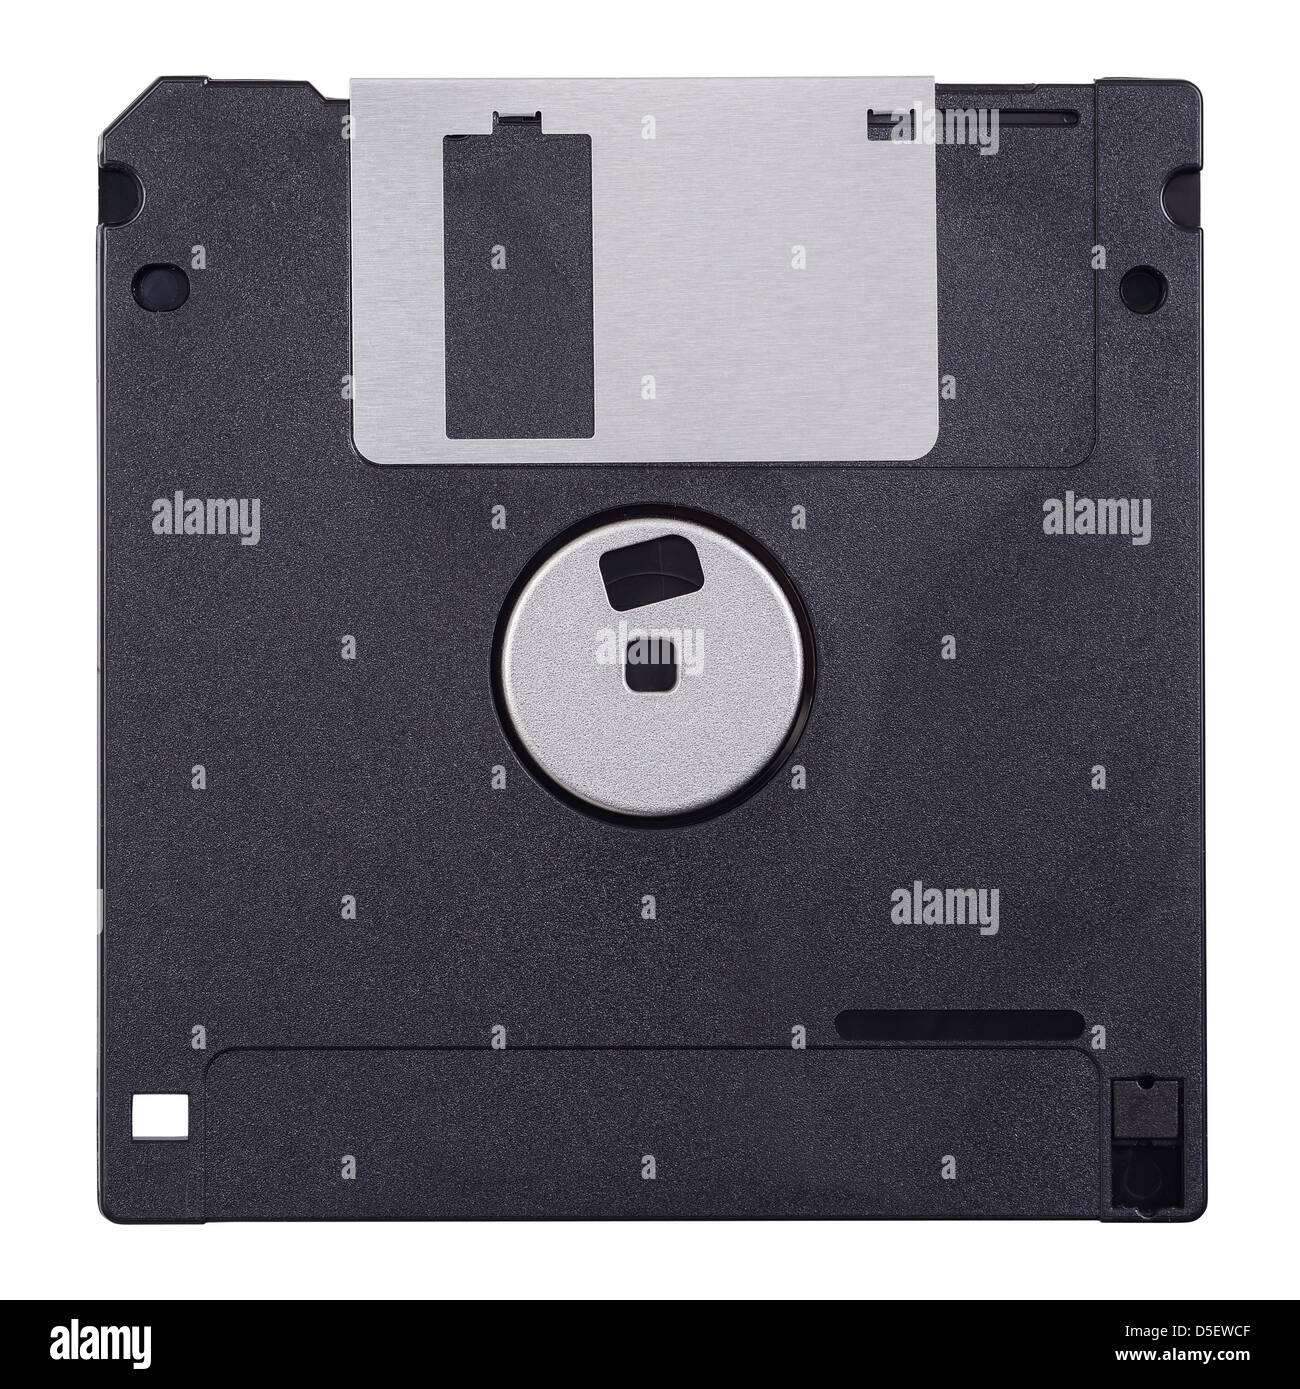 Computer floppy disc 3 1/2 pollici Foto Stock